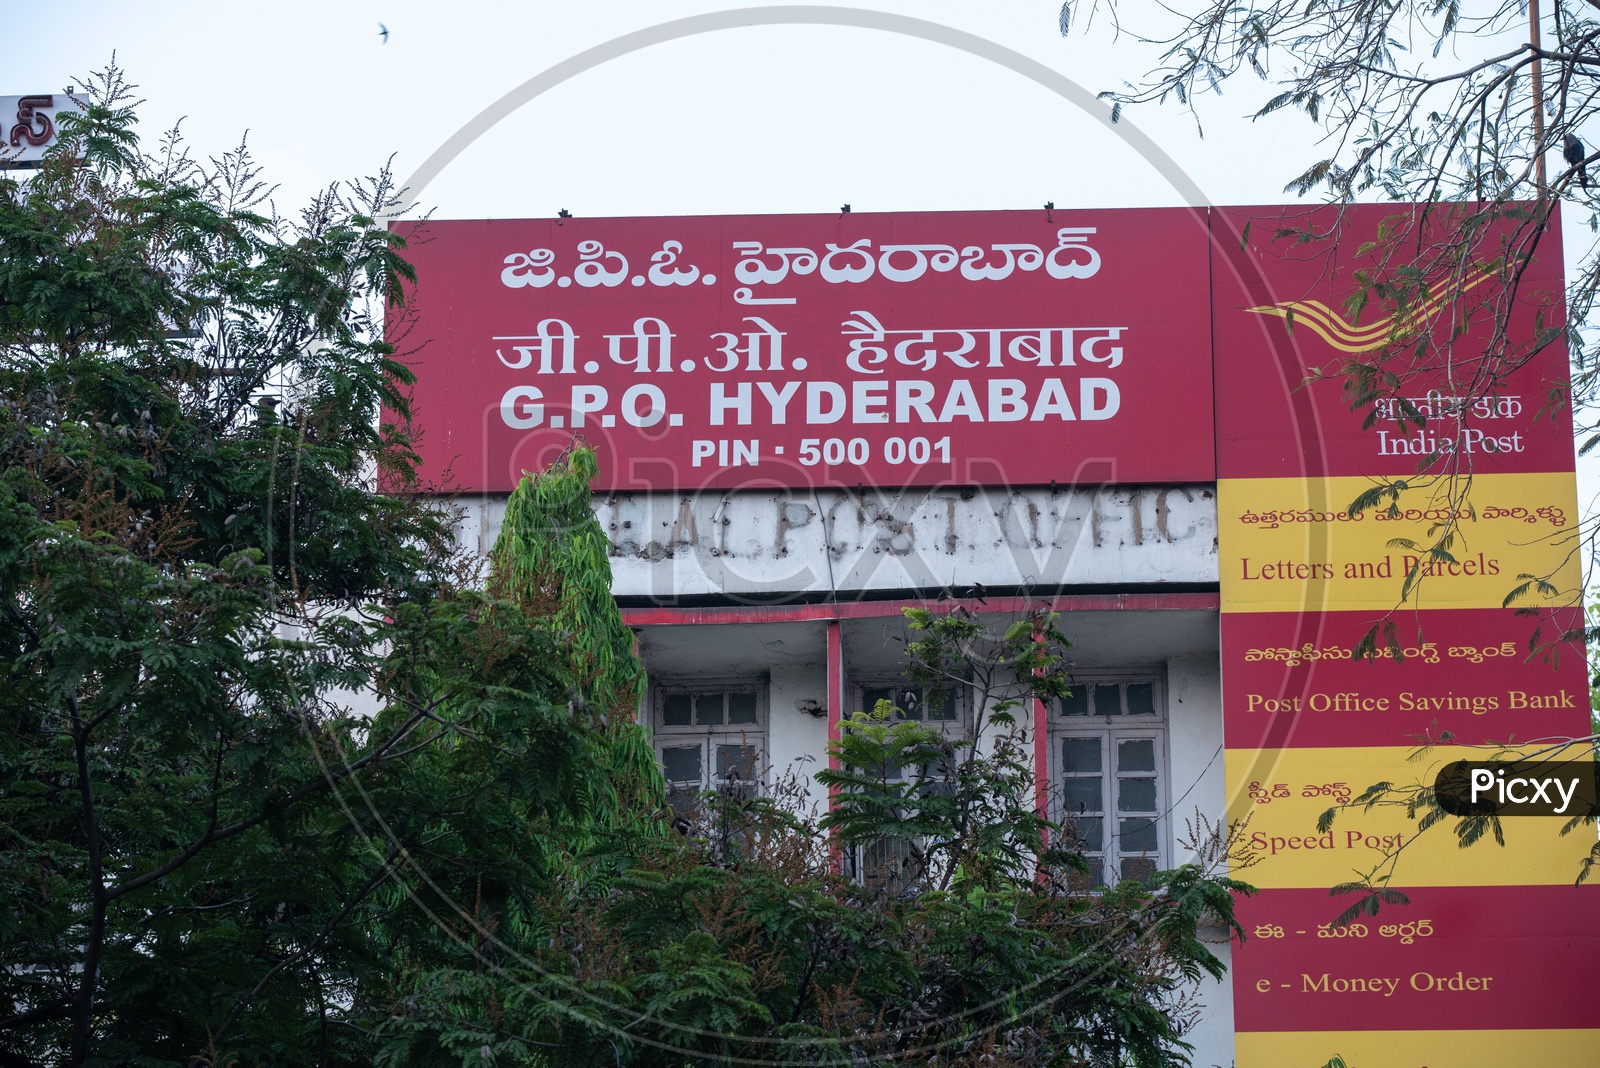 Grand Post Office ( G.P.O ) Hyderabad